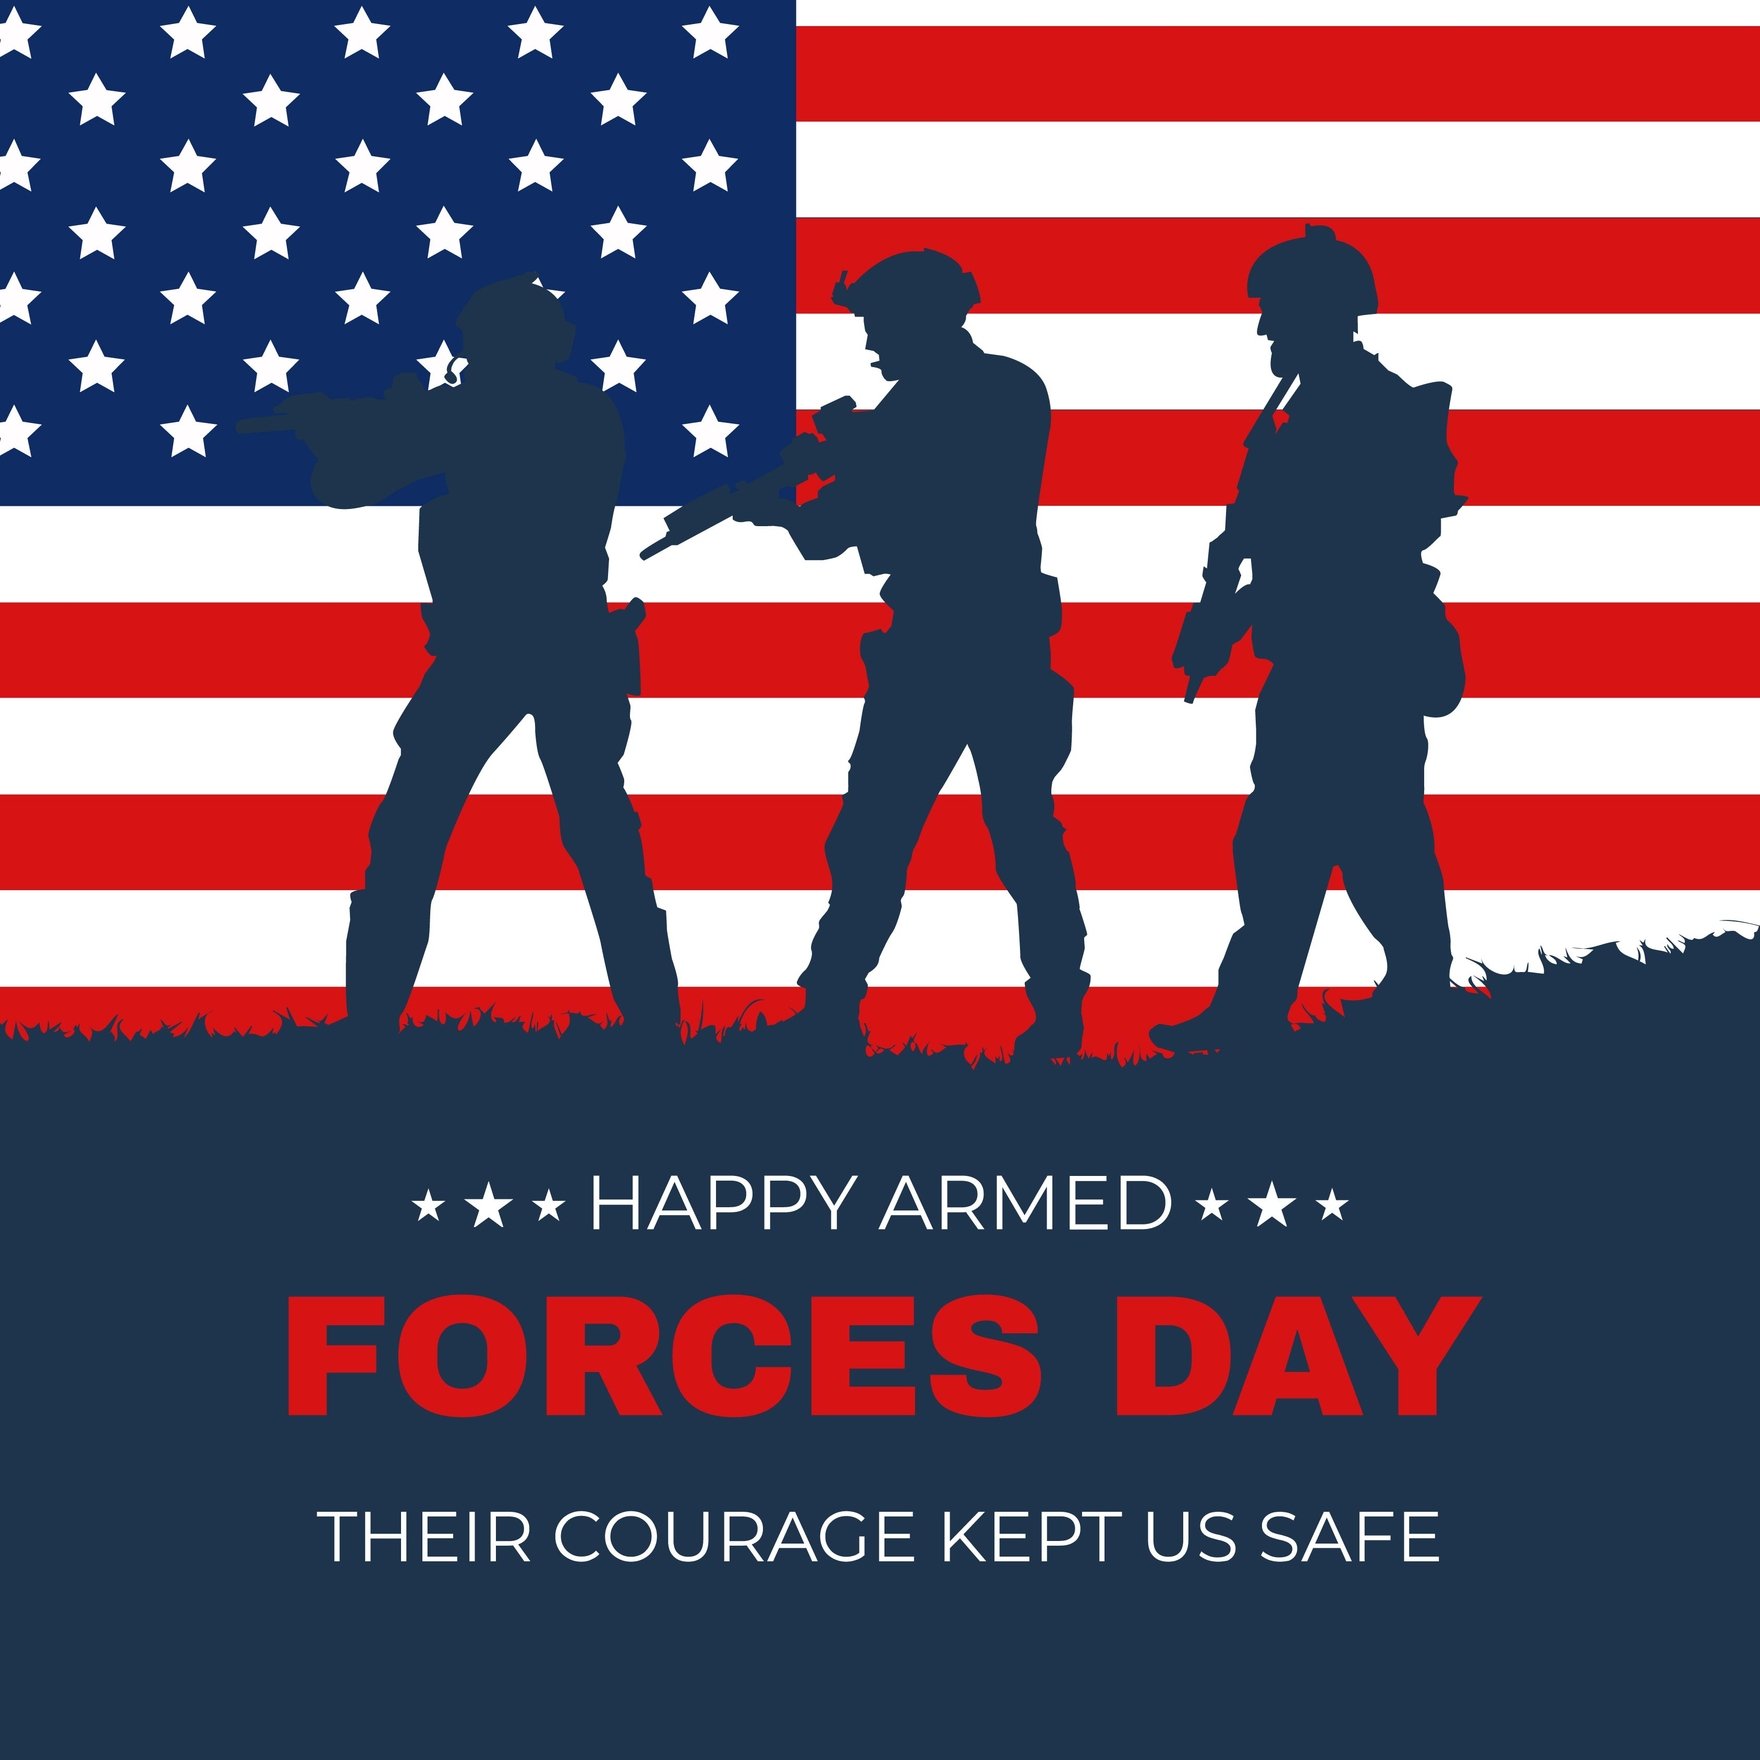 Free Armed Forces Day Instagram Post in Illustrator, PSD, EPS, SVG, PNG, JPEG